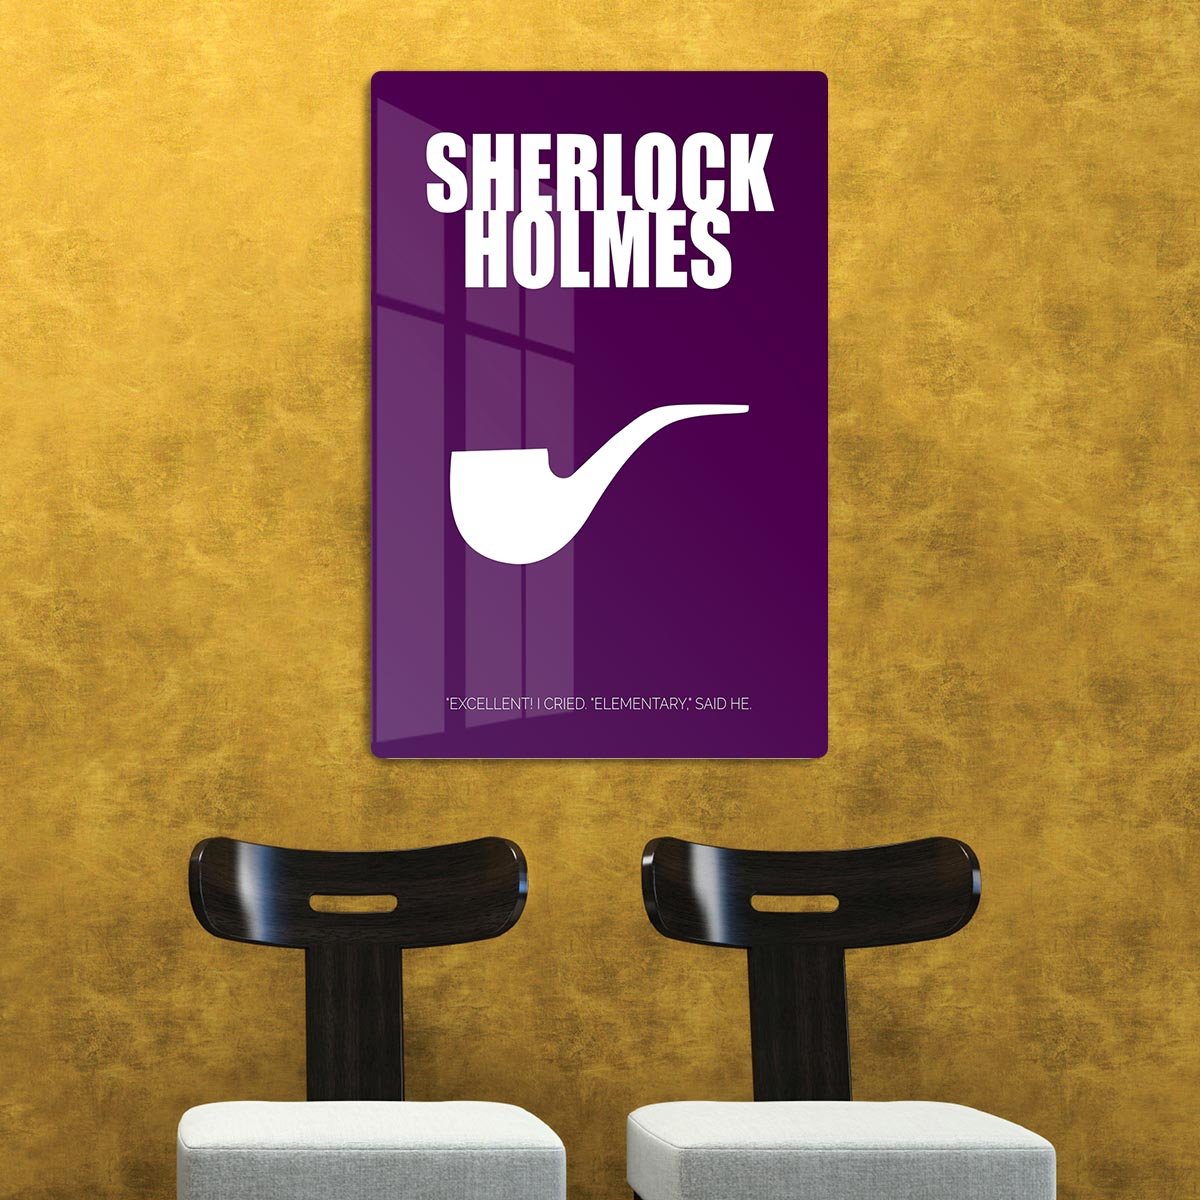 Sherlock Holmes Minimal Movie HD Metal Print